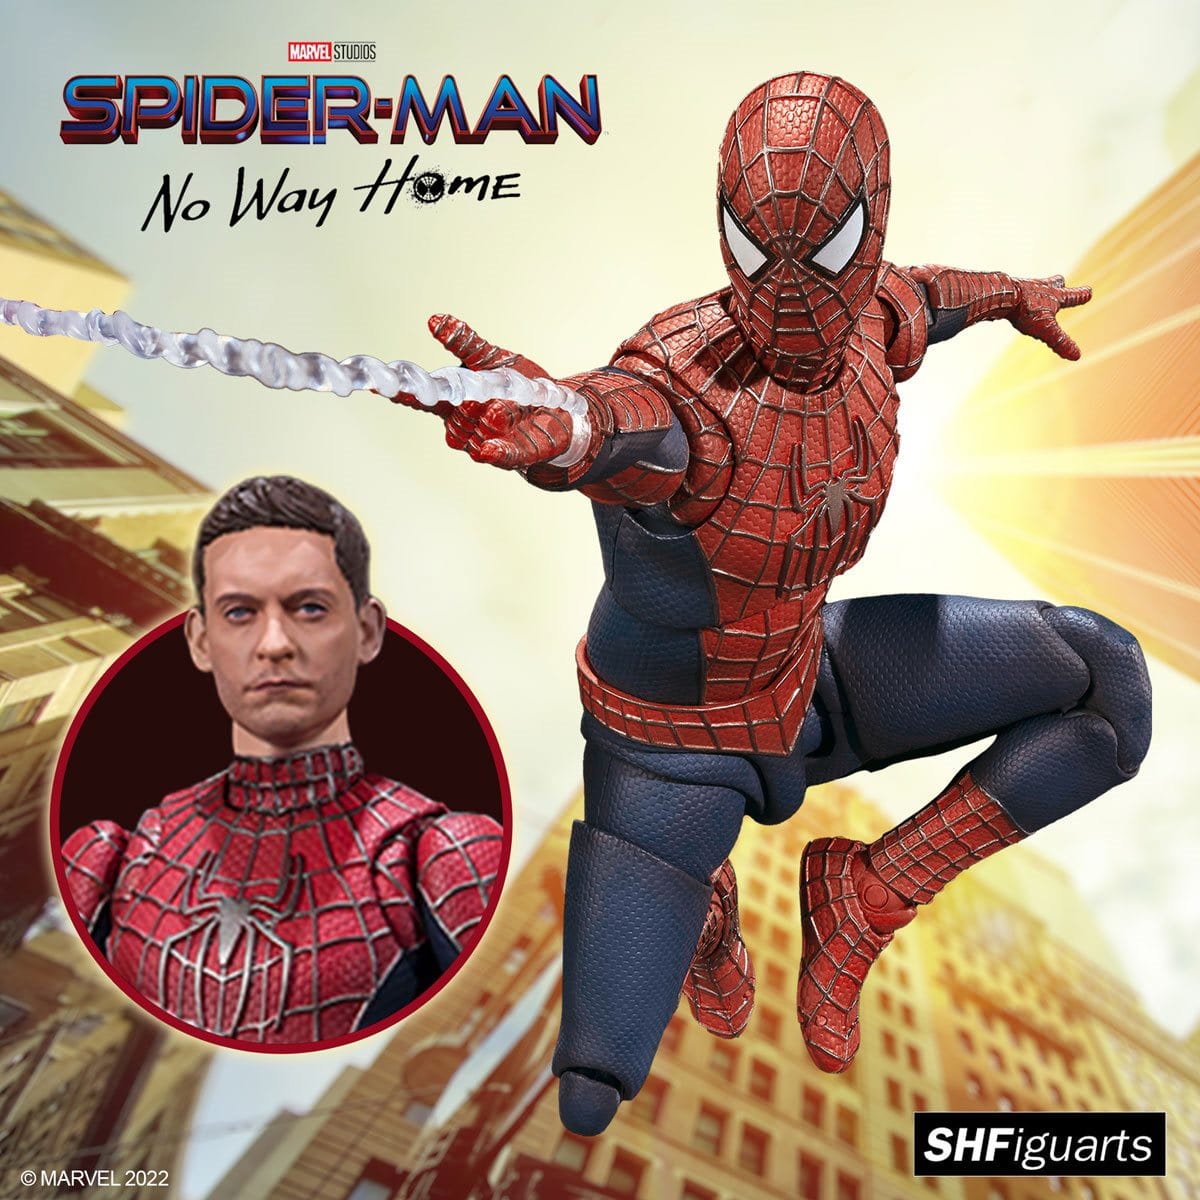 Spider-Man: No Way Home The Friendly Neighbourhood Spider-Man S.H.Figuarts Action Figure Media